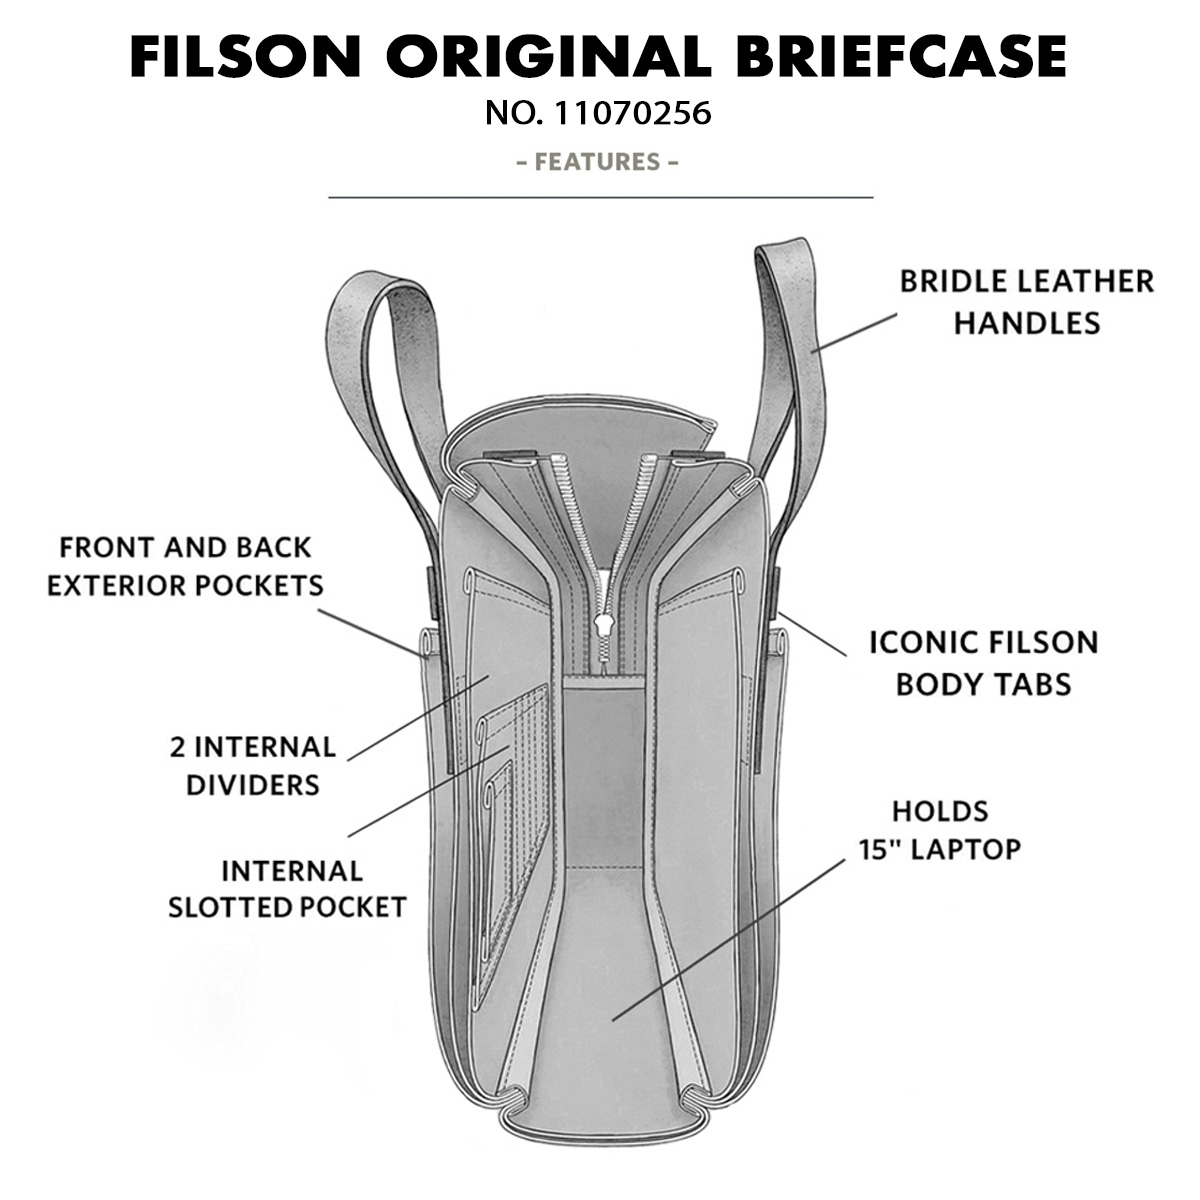 Filson Original Briefcase 11070256 Navy, features